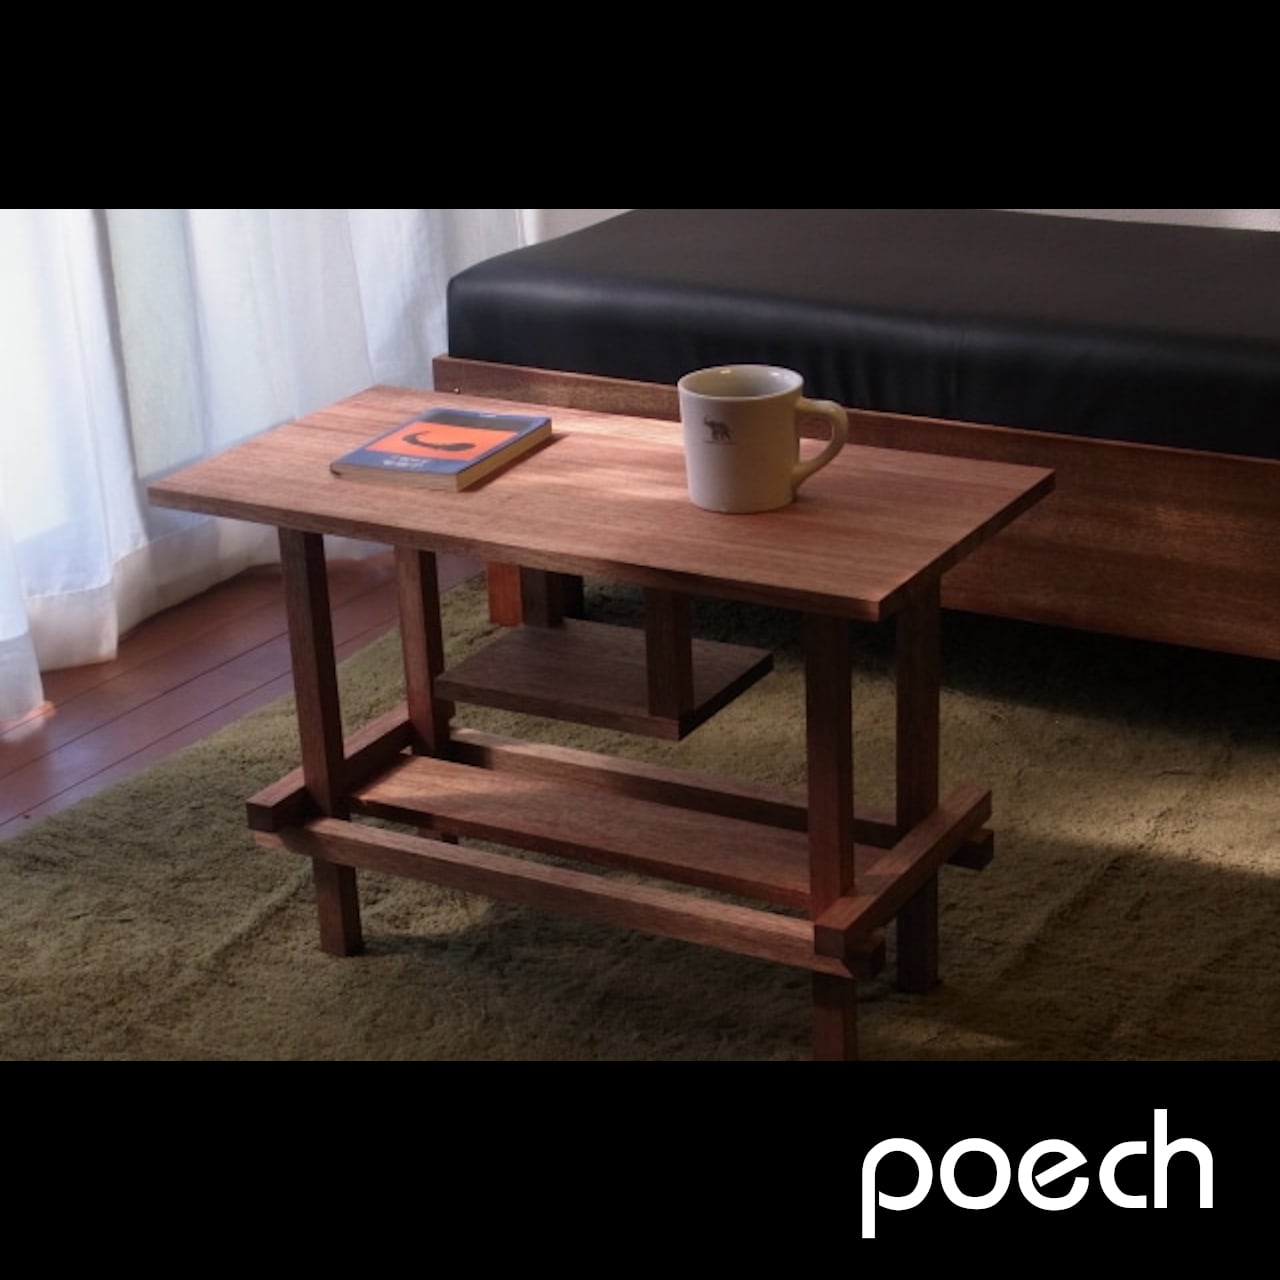 Coffee table ”Hang” No.1 Hardwood   デザイン家具 poech